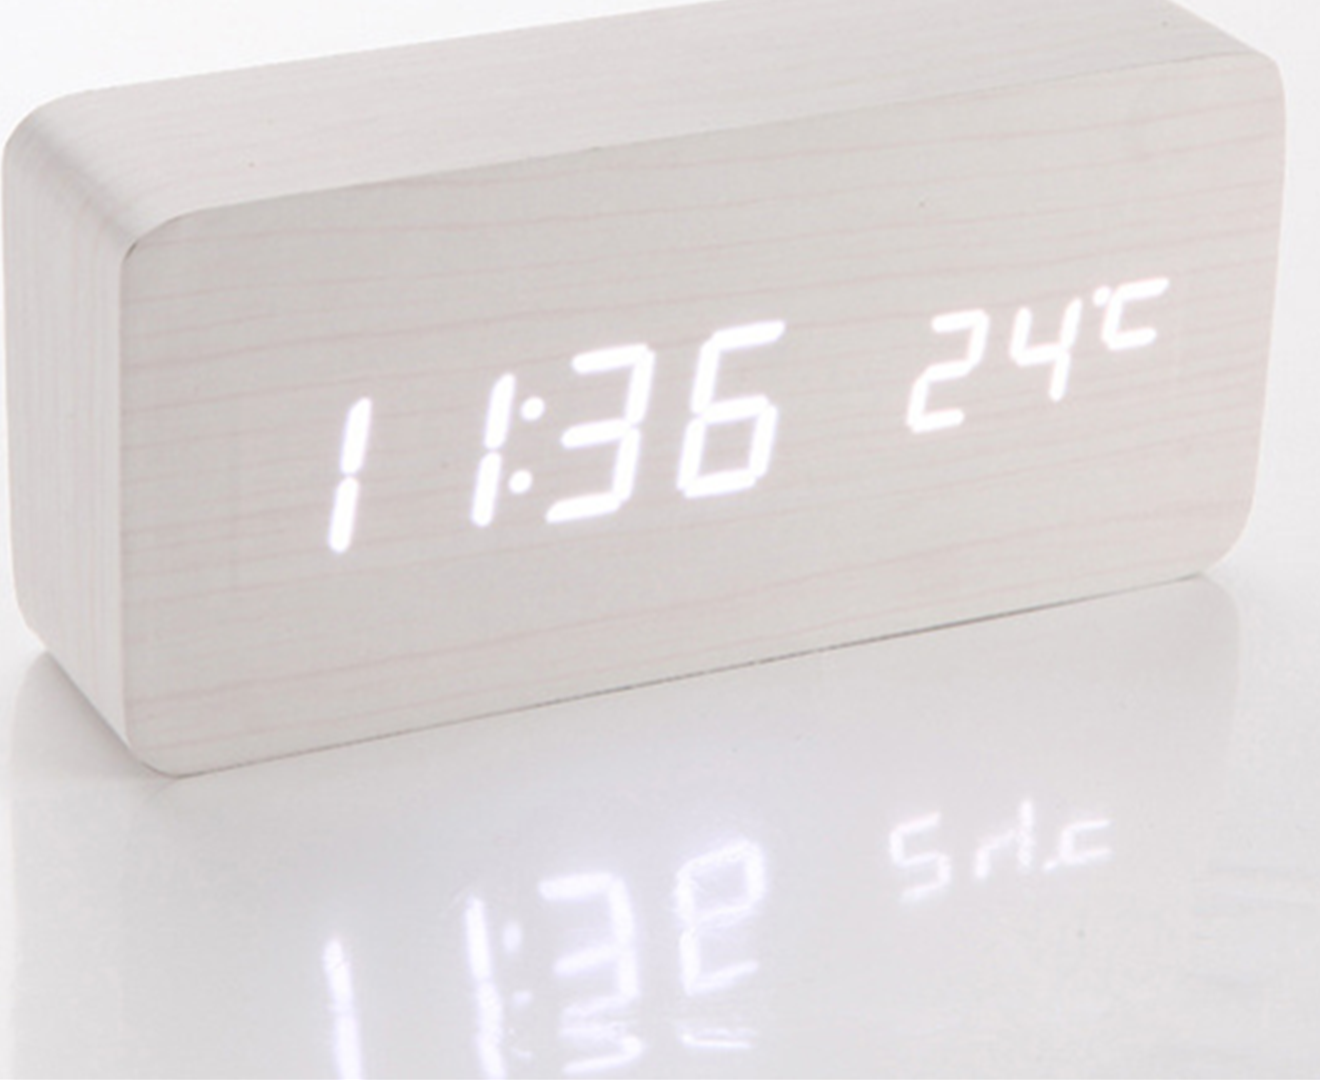  bianco Tfrdertuuigf creative LED sveglia temperatura elettronico orologio sveglia  